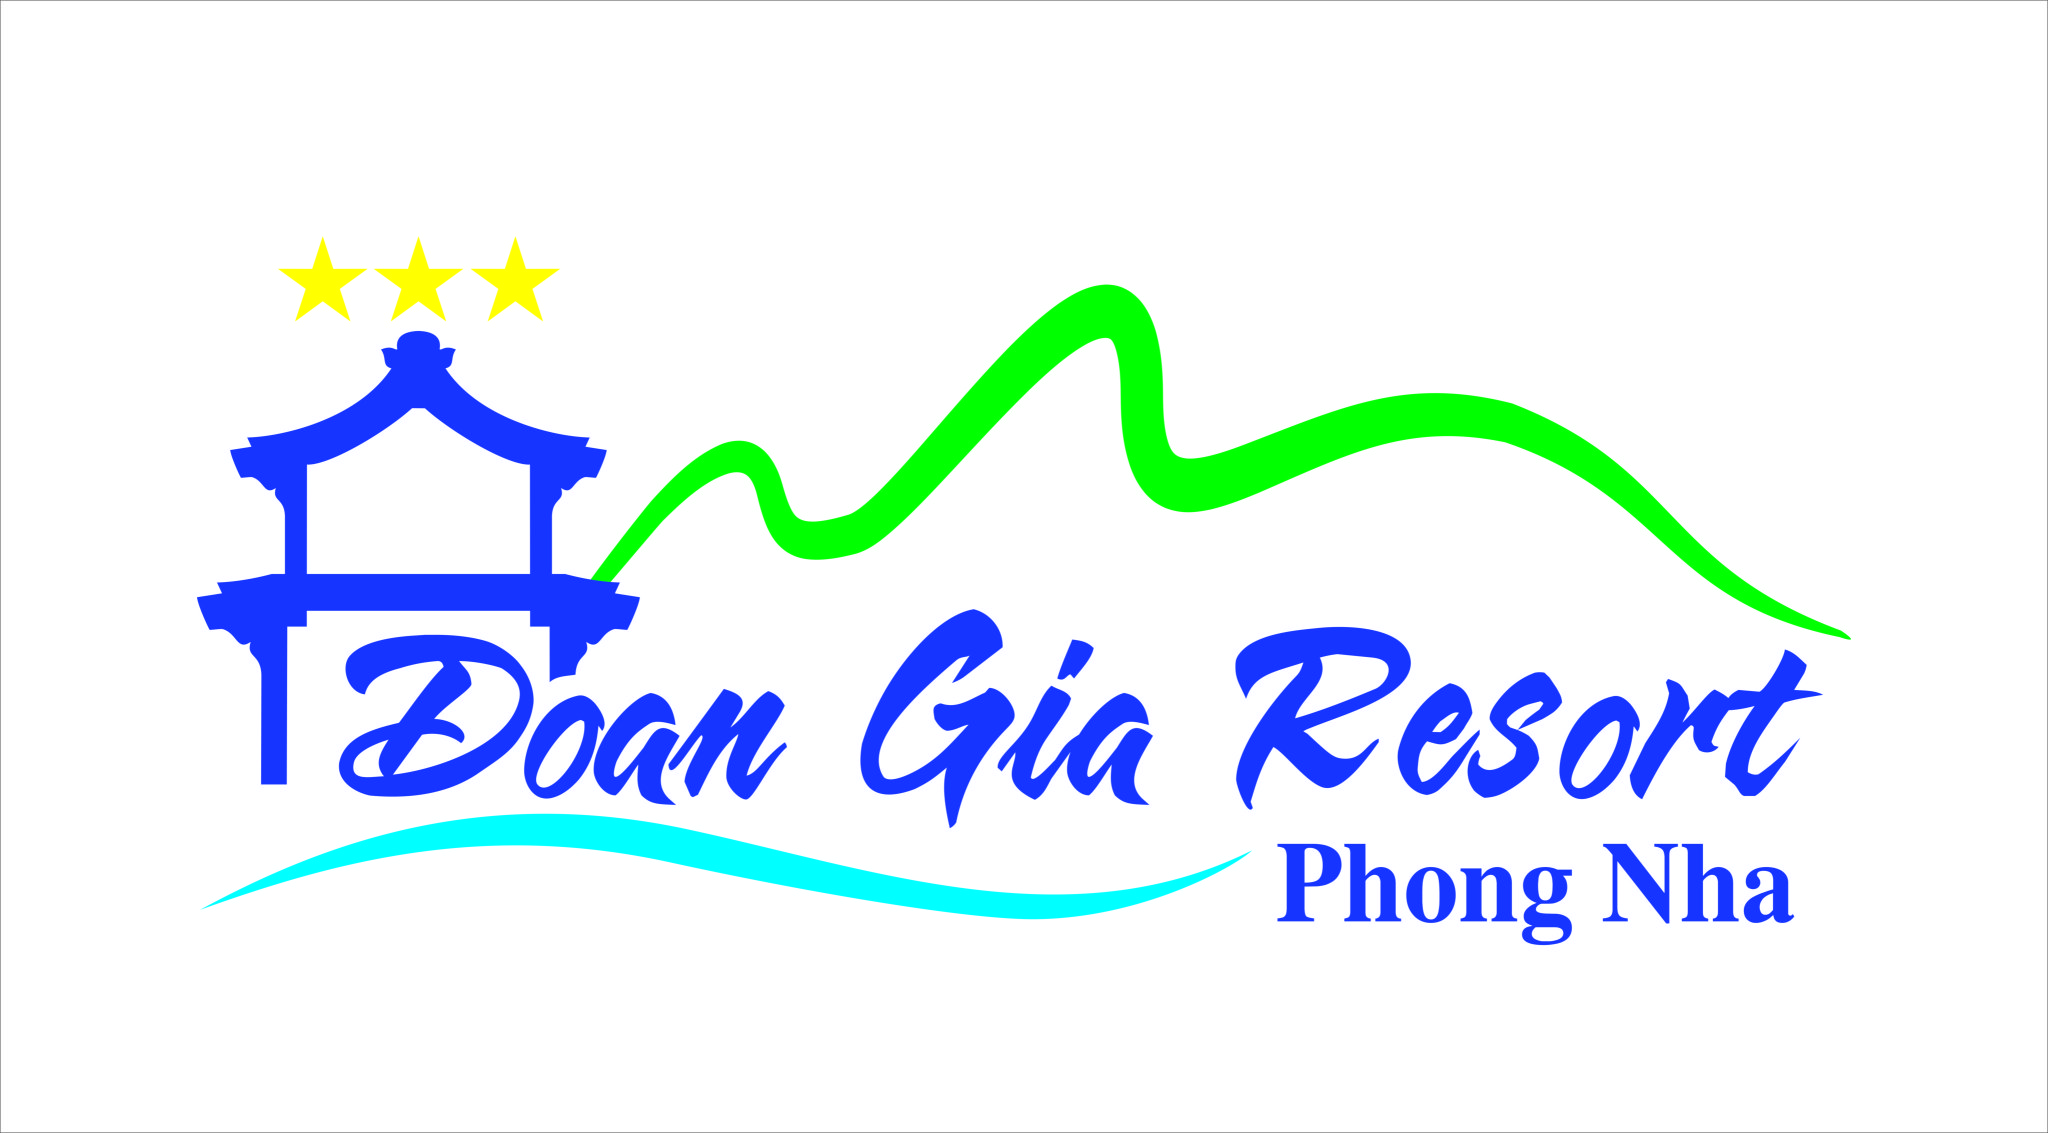 Doan Gia Resort Phongnha